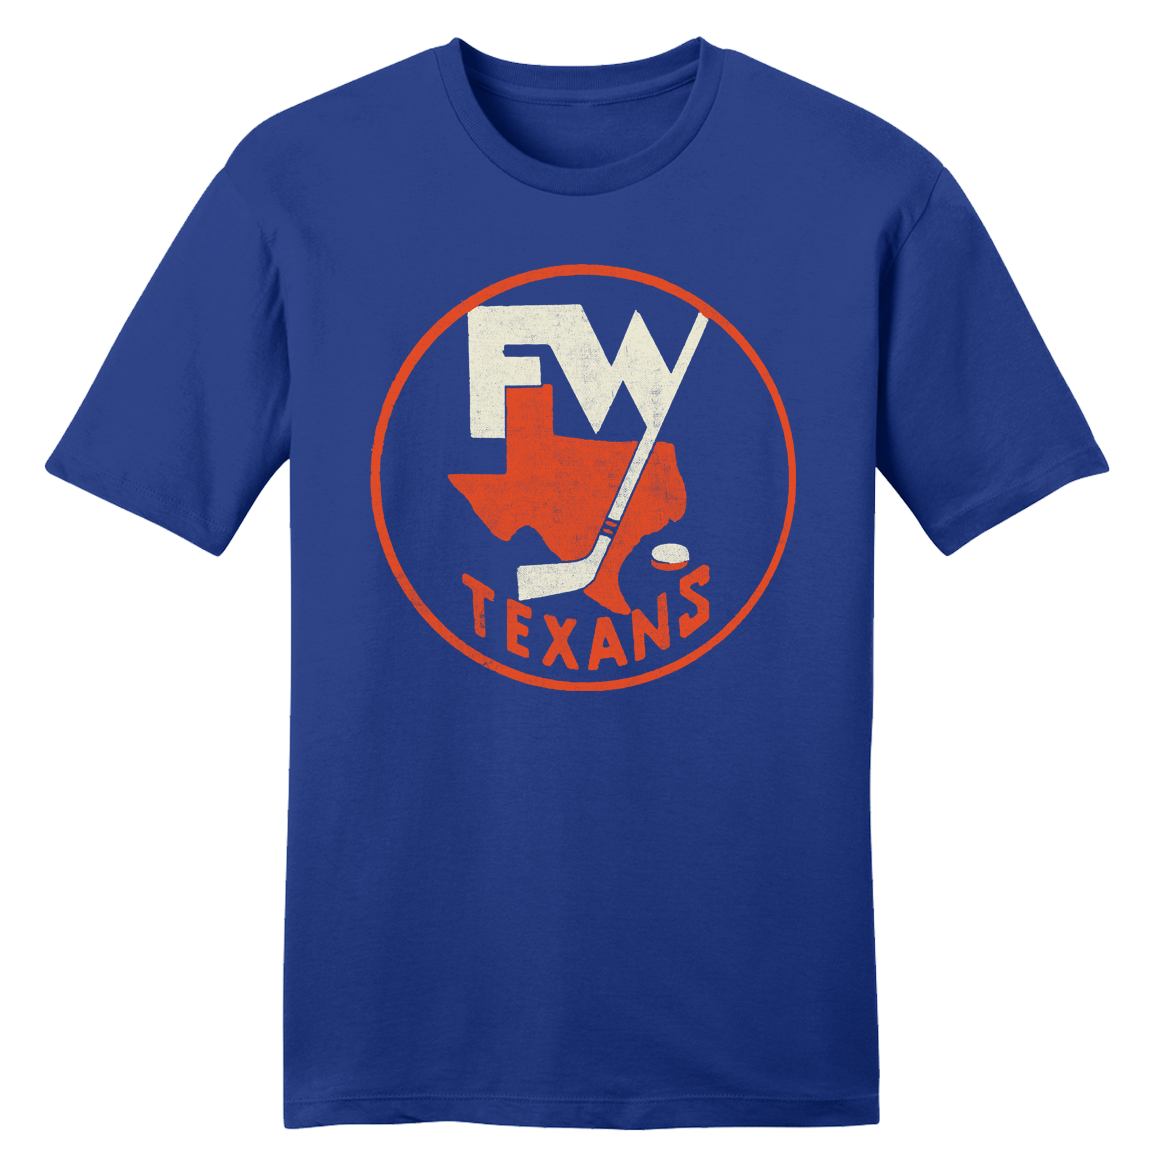 Ft. Worth Texans